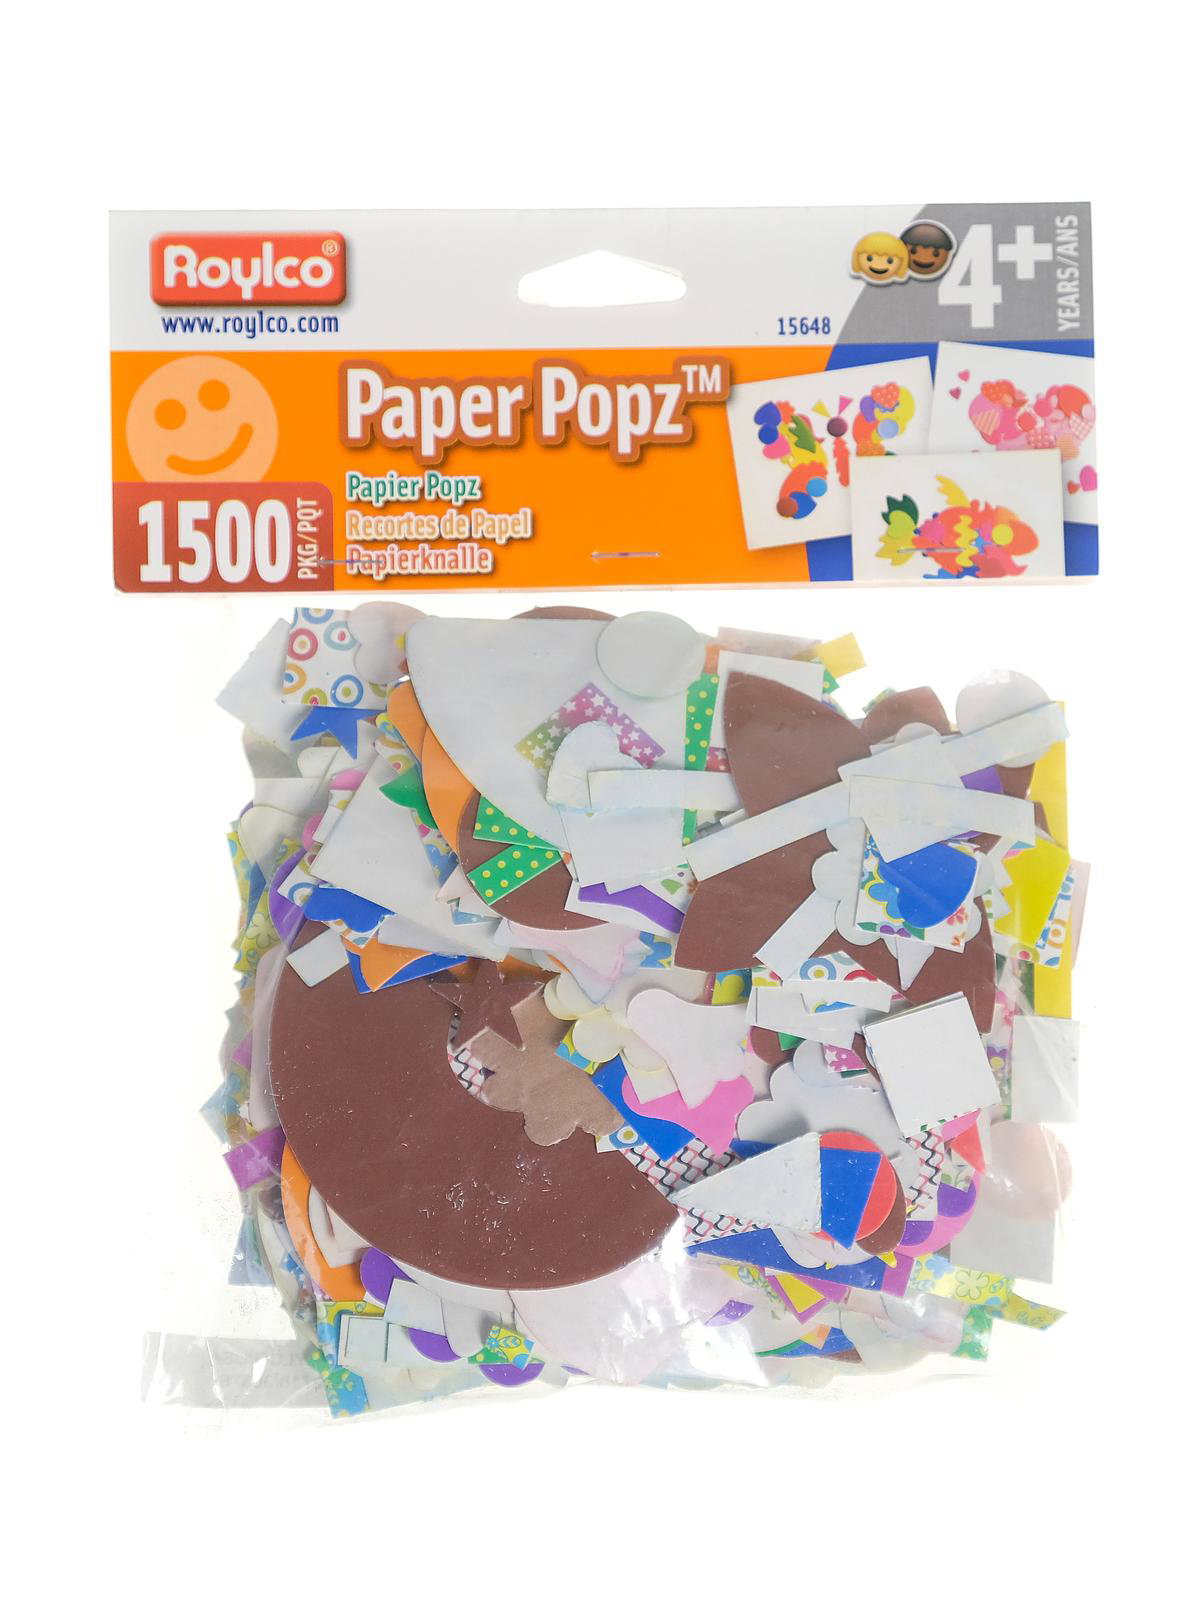 2+ Toddler Art Kit – Roylco